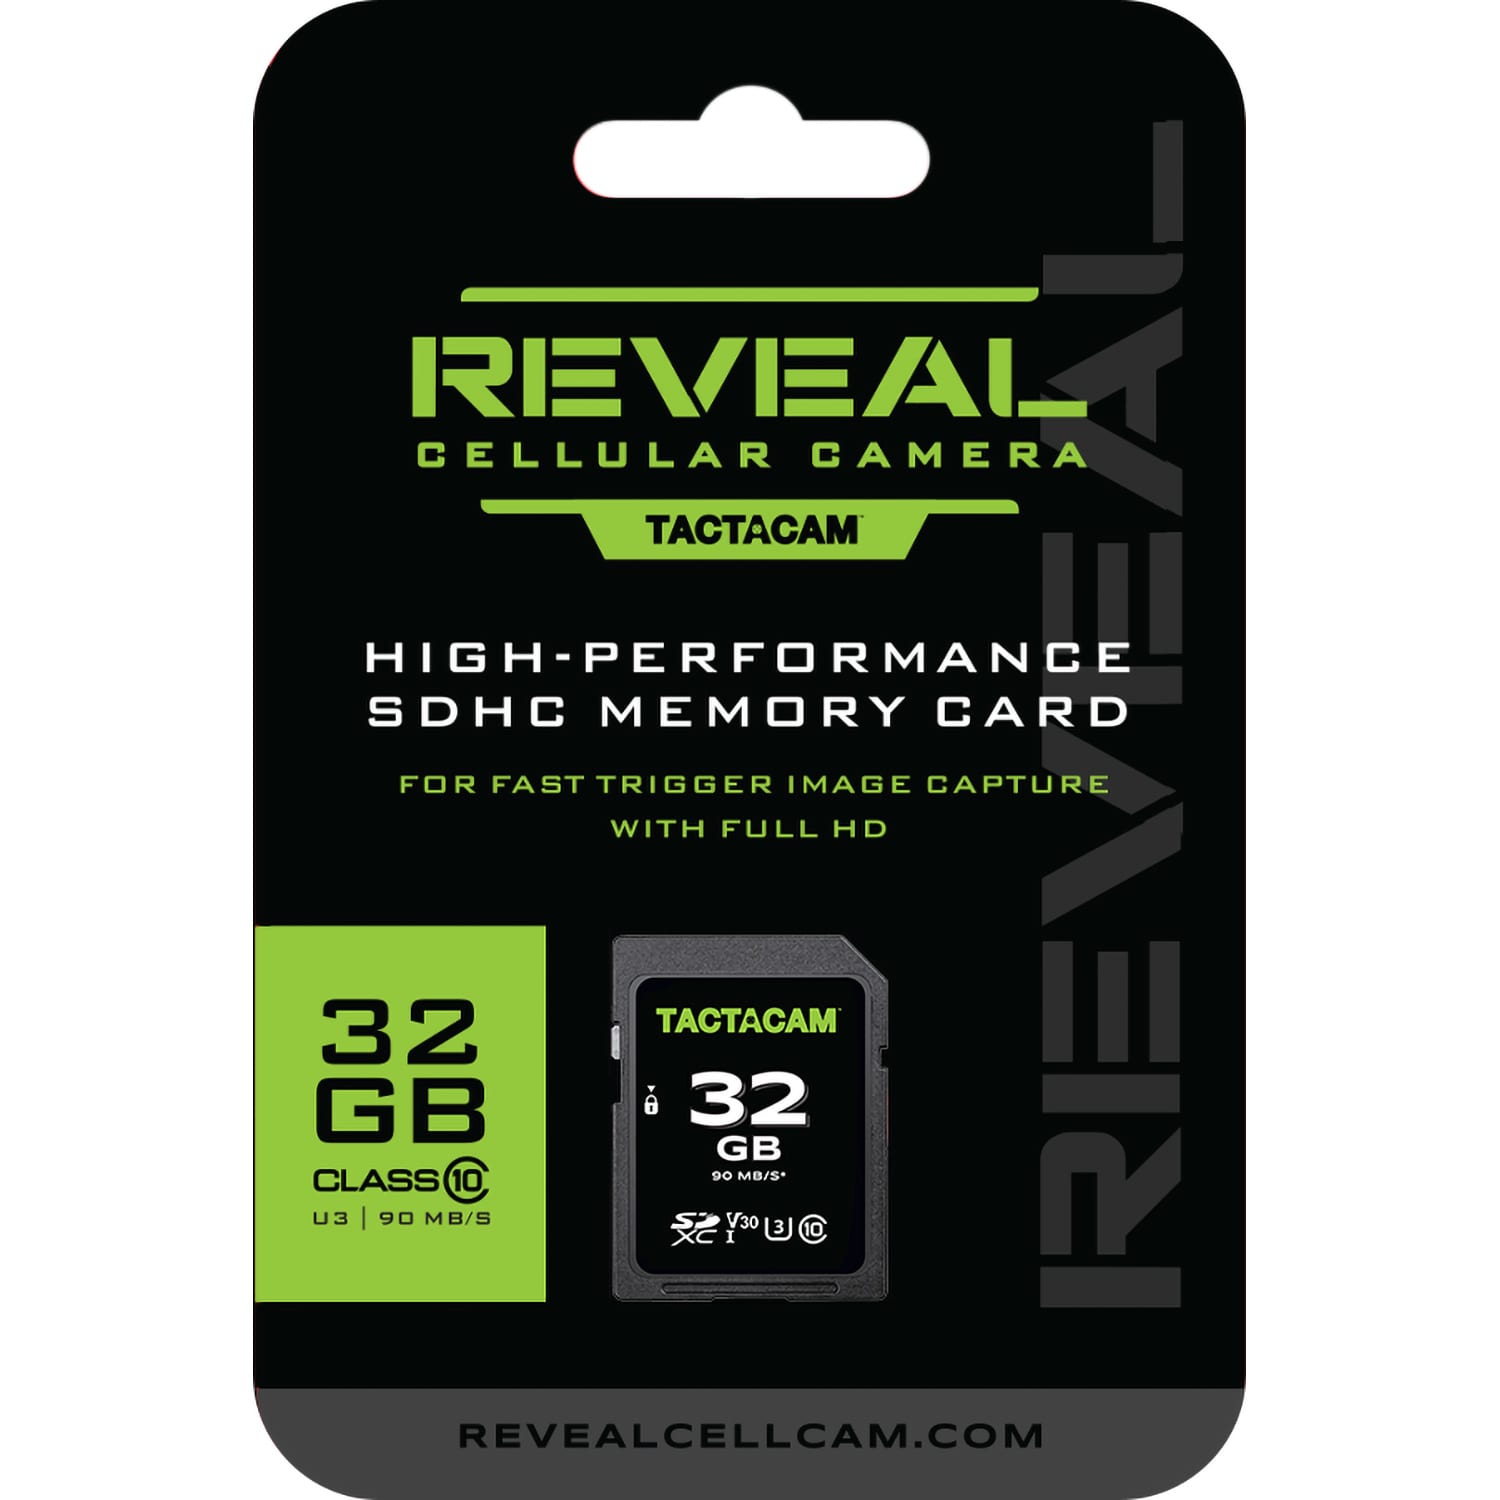 Tactacam® REVEAL Full Size 32 GB SD Card